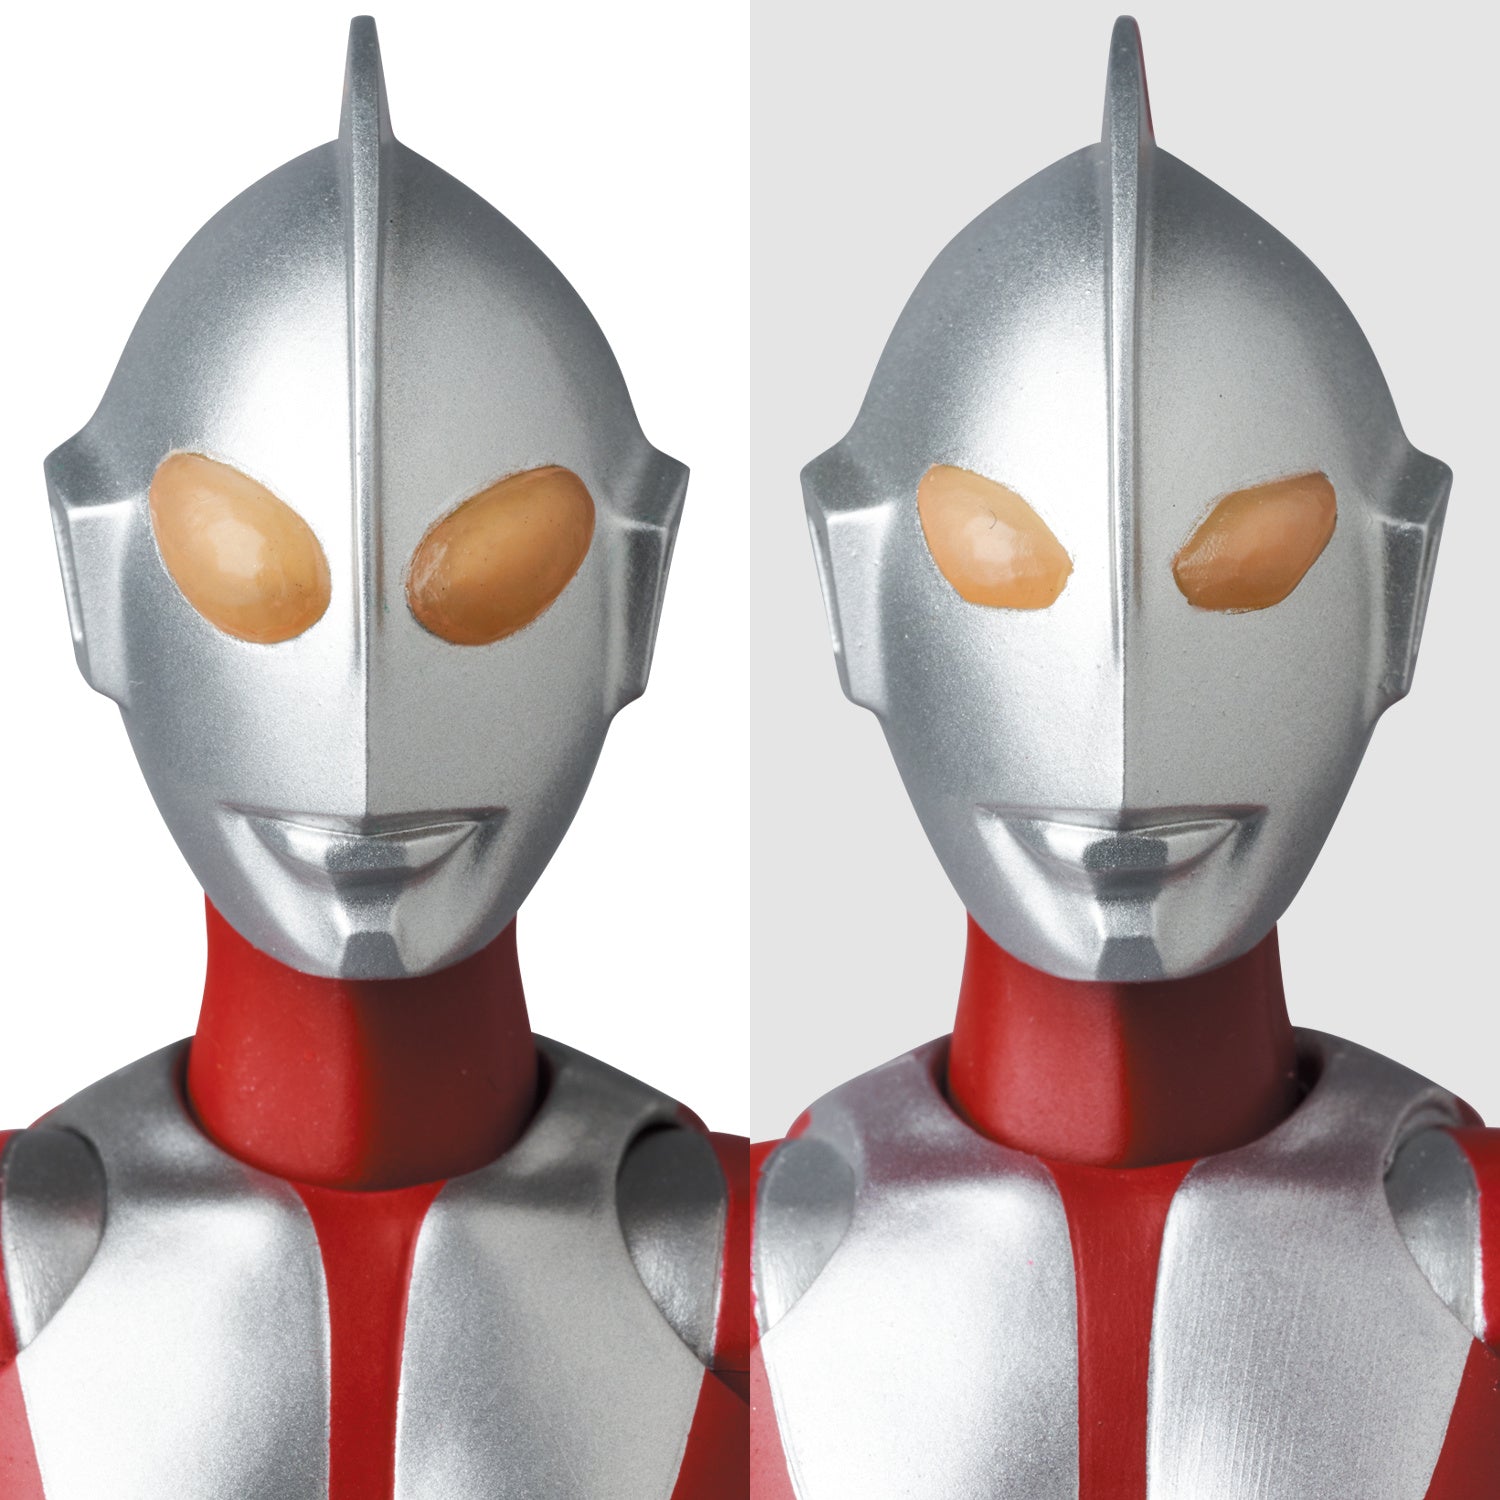 Medicom - MAFEX No. 207 - Shin Ultraman - Ultraman (Deluxe Ver.)